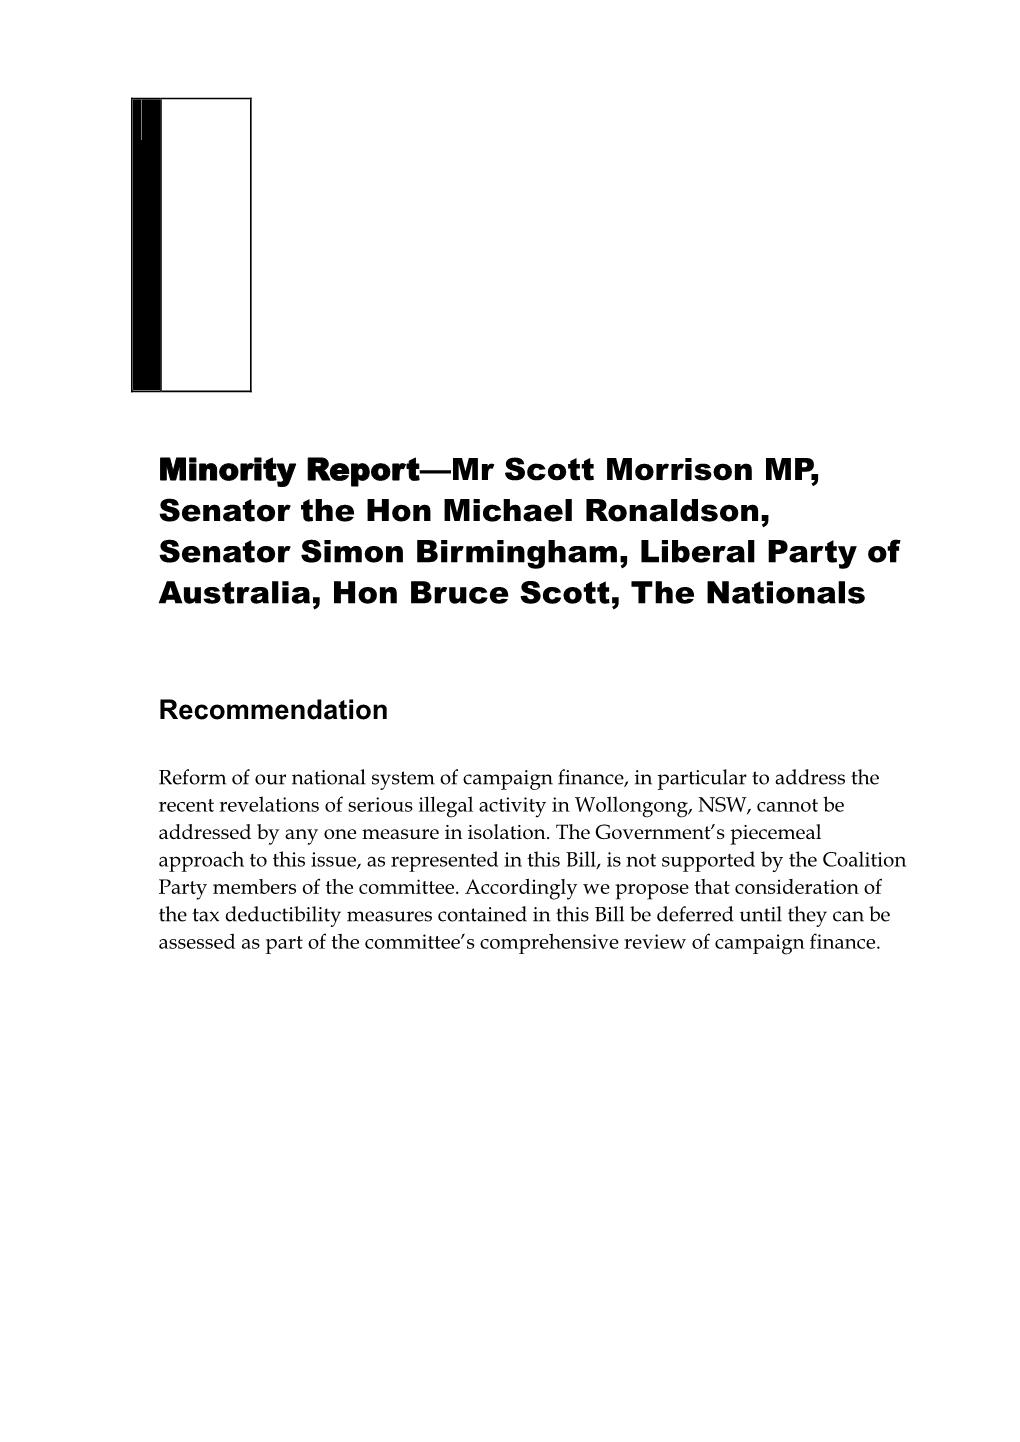 Minority Report—Mr Scott Morrison MP, Senator the Hon Michael Ronaldson, Senator Simon Birmingham, Liberal Party of Australia, Hon Bruce Scott, the Nationals